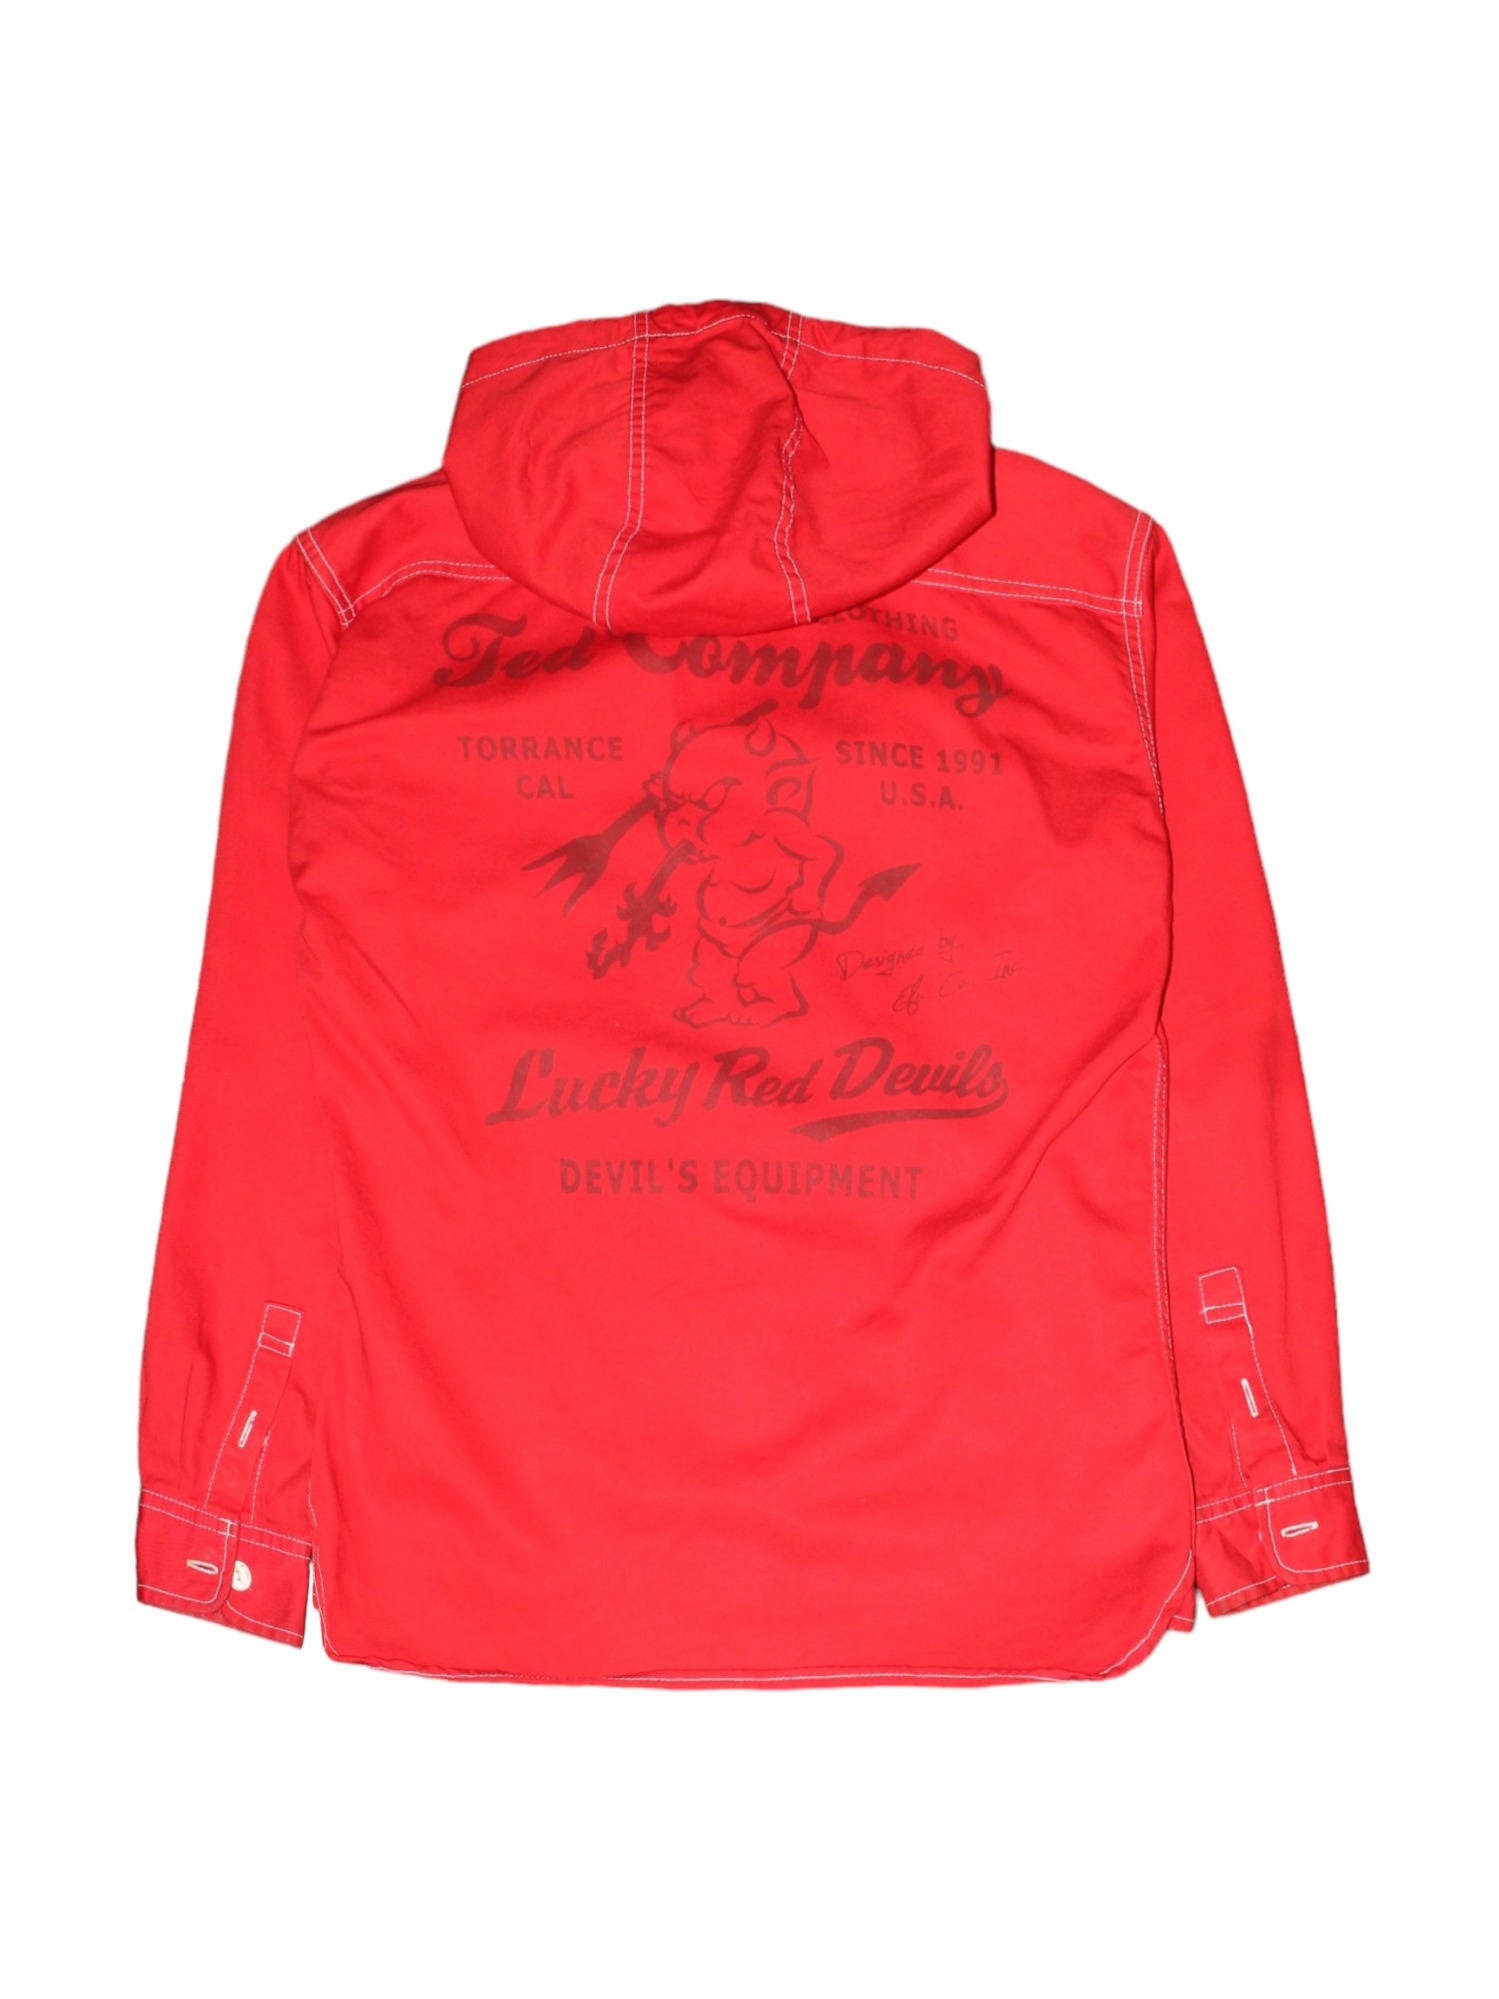 TED COMPANY Red Devil Hood Shirts Jacket